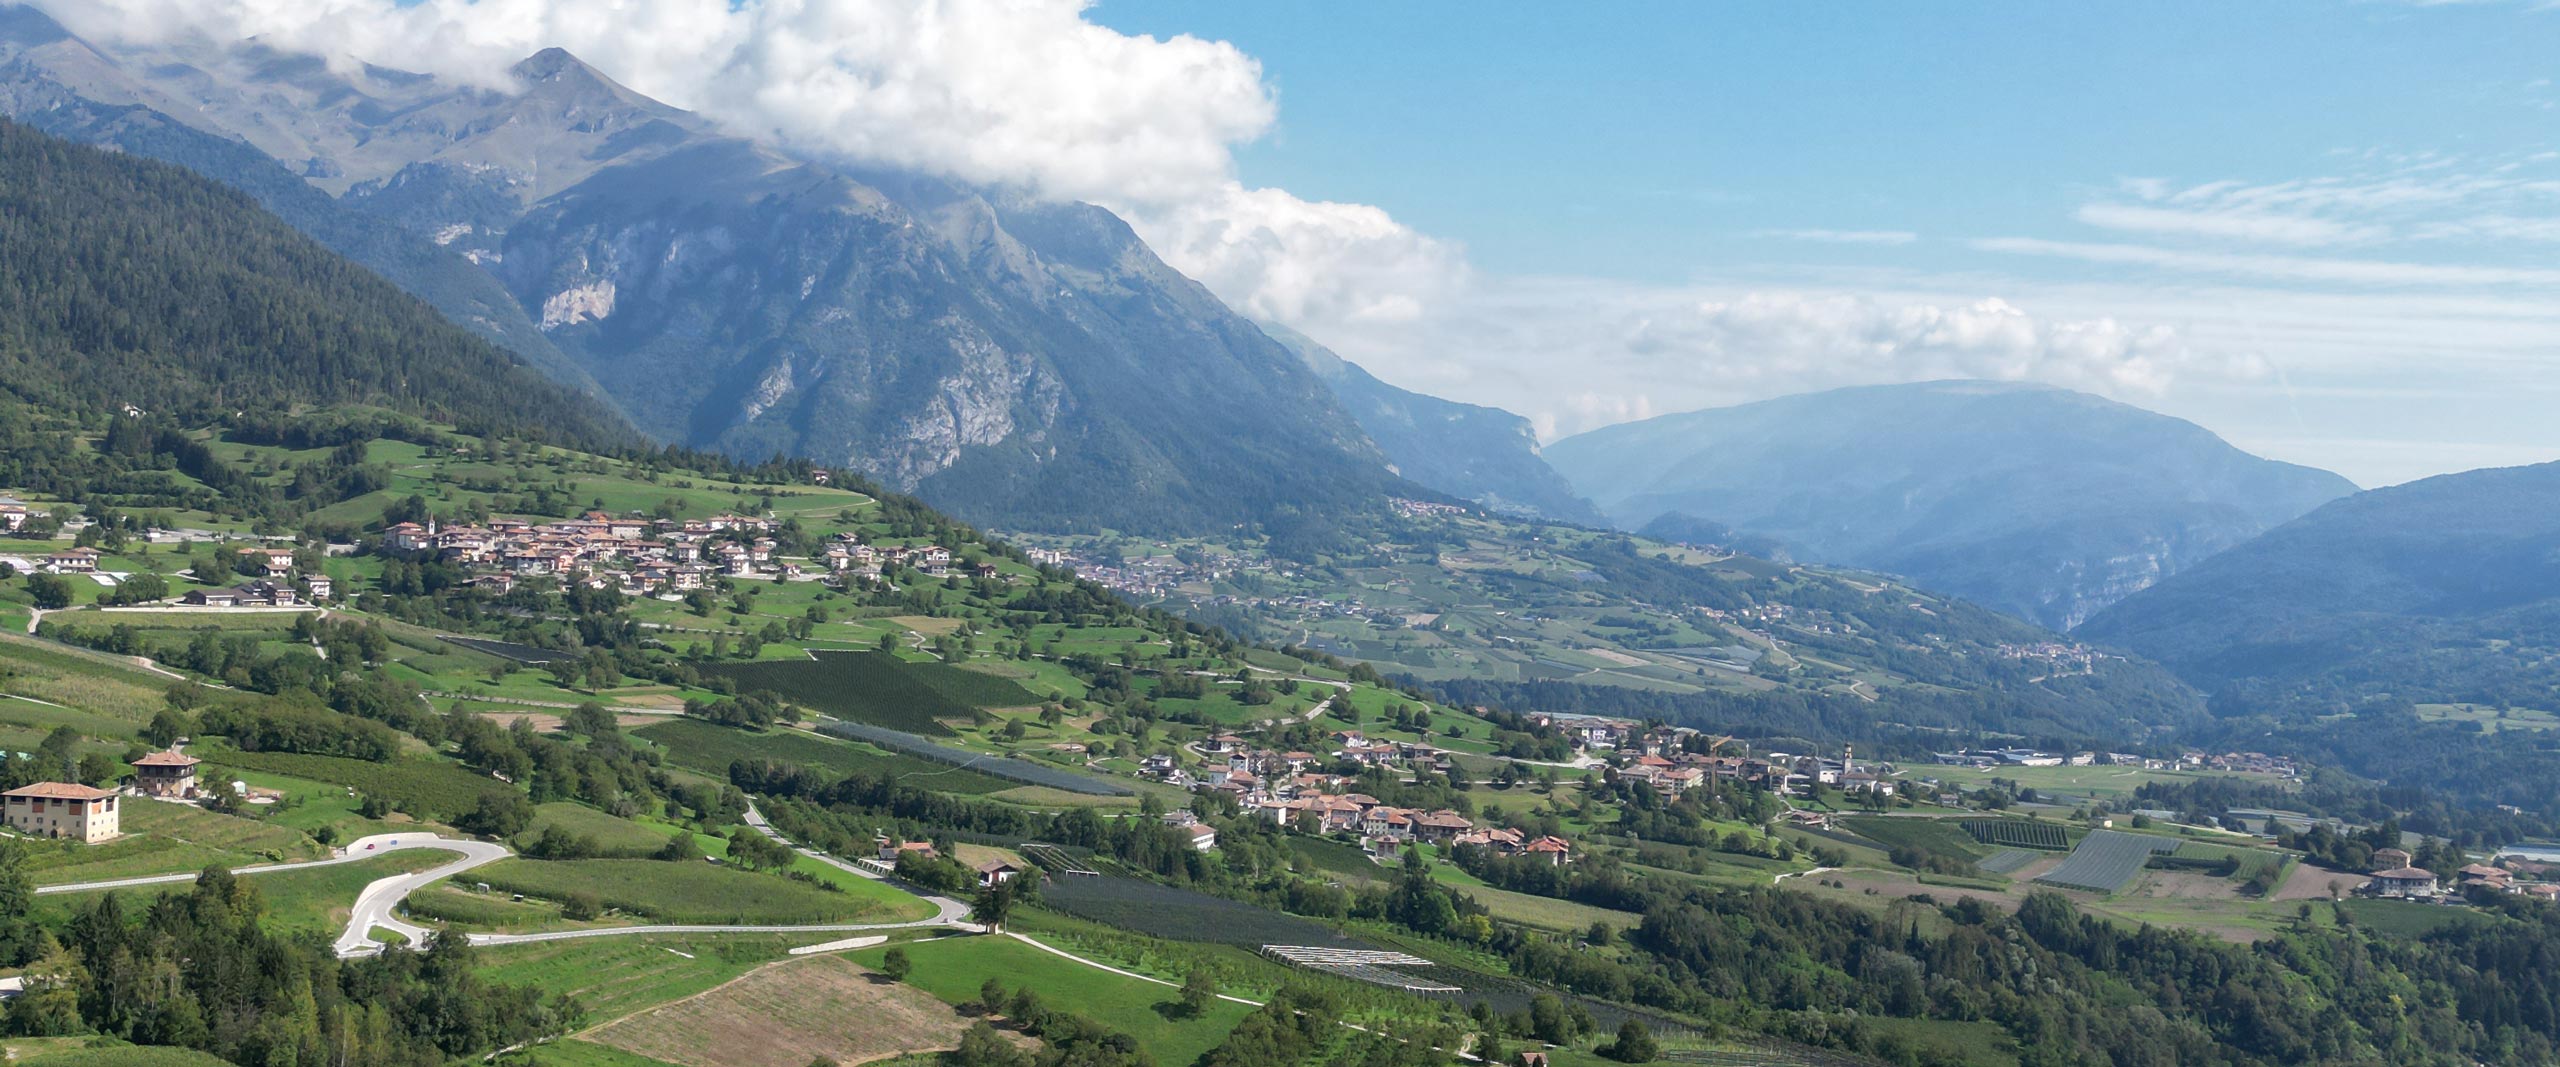 Agritur Maso alle Rose in Cavrasto di Bleggio Superiore, umgeben von Grün und Natur, im Trentino